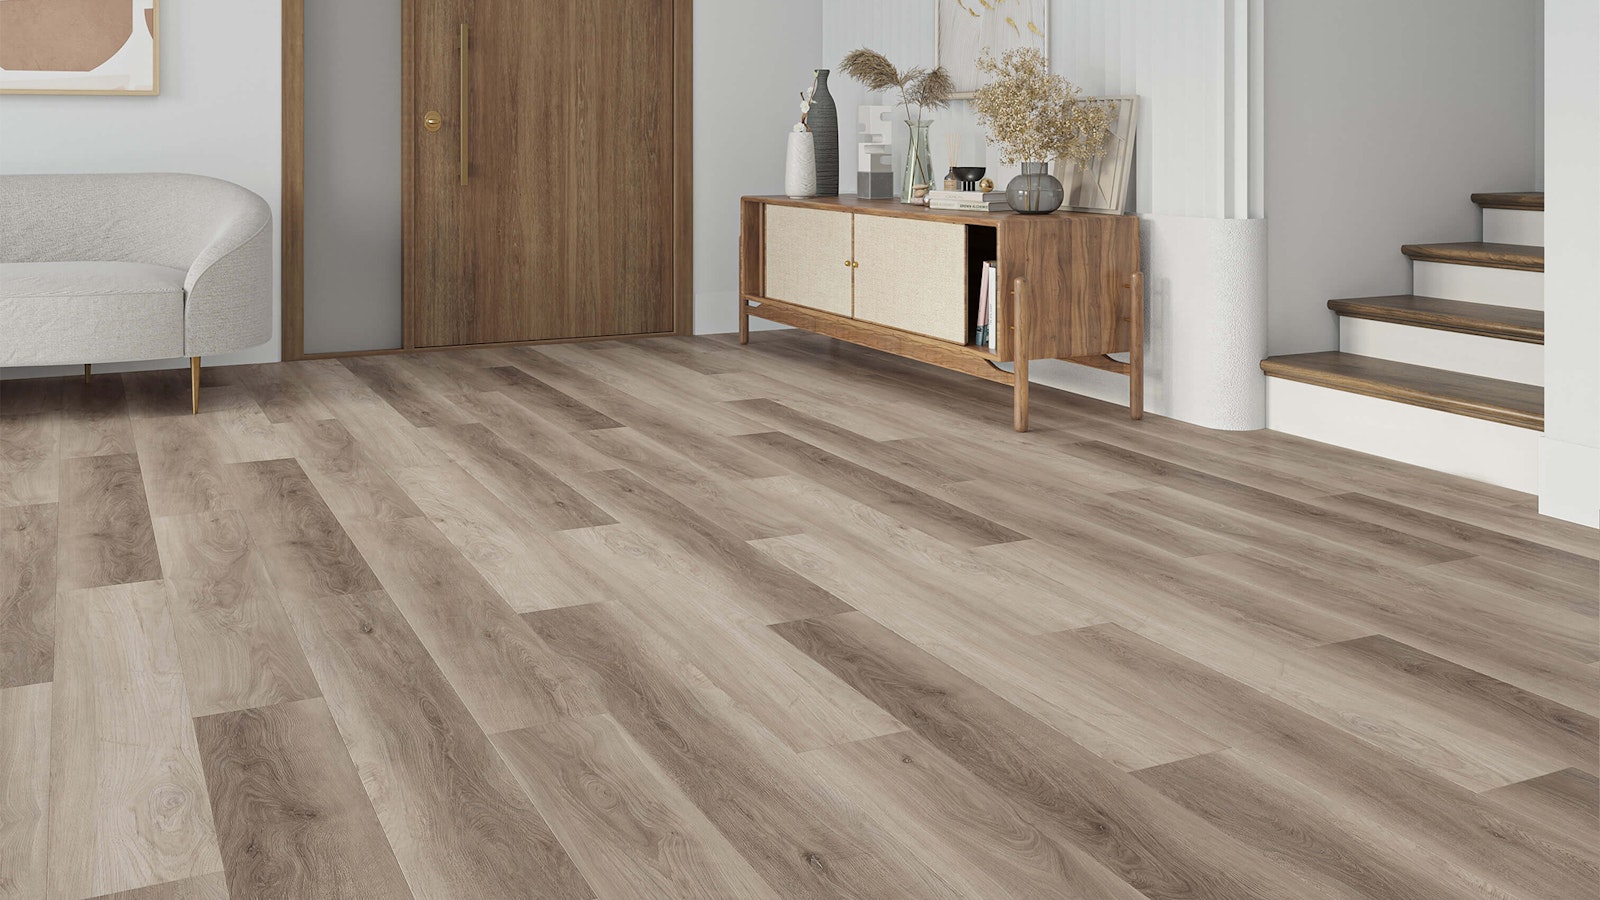 Luxury Flooring Wooden Floors